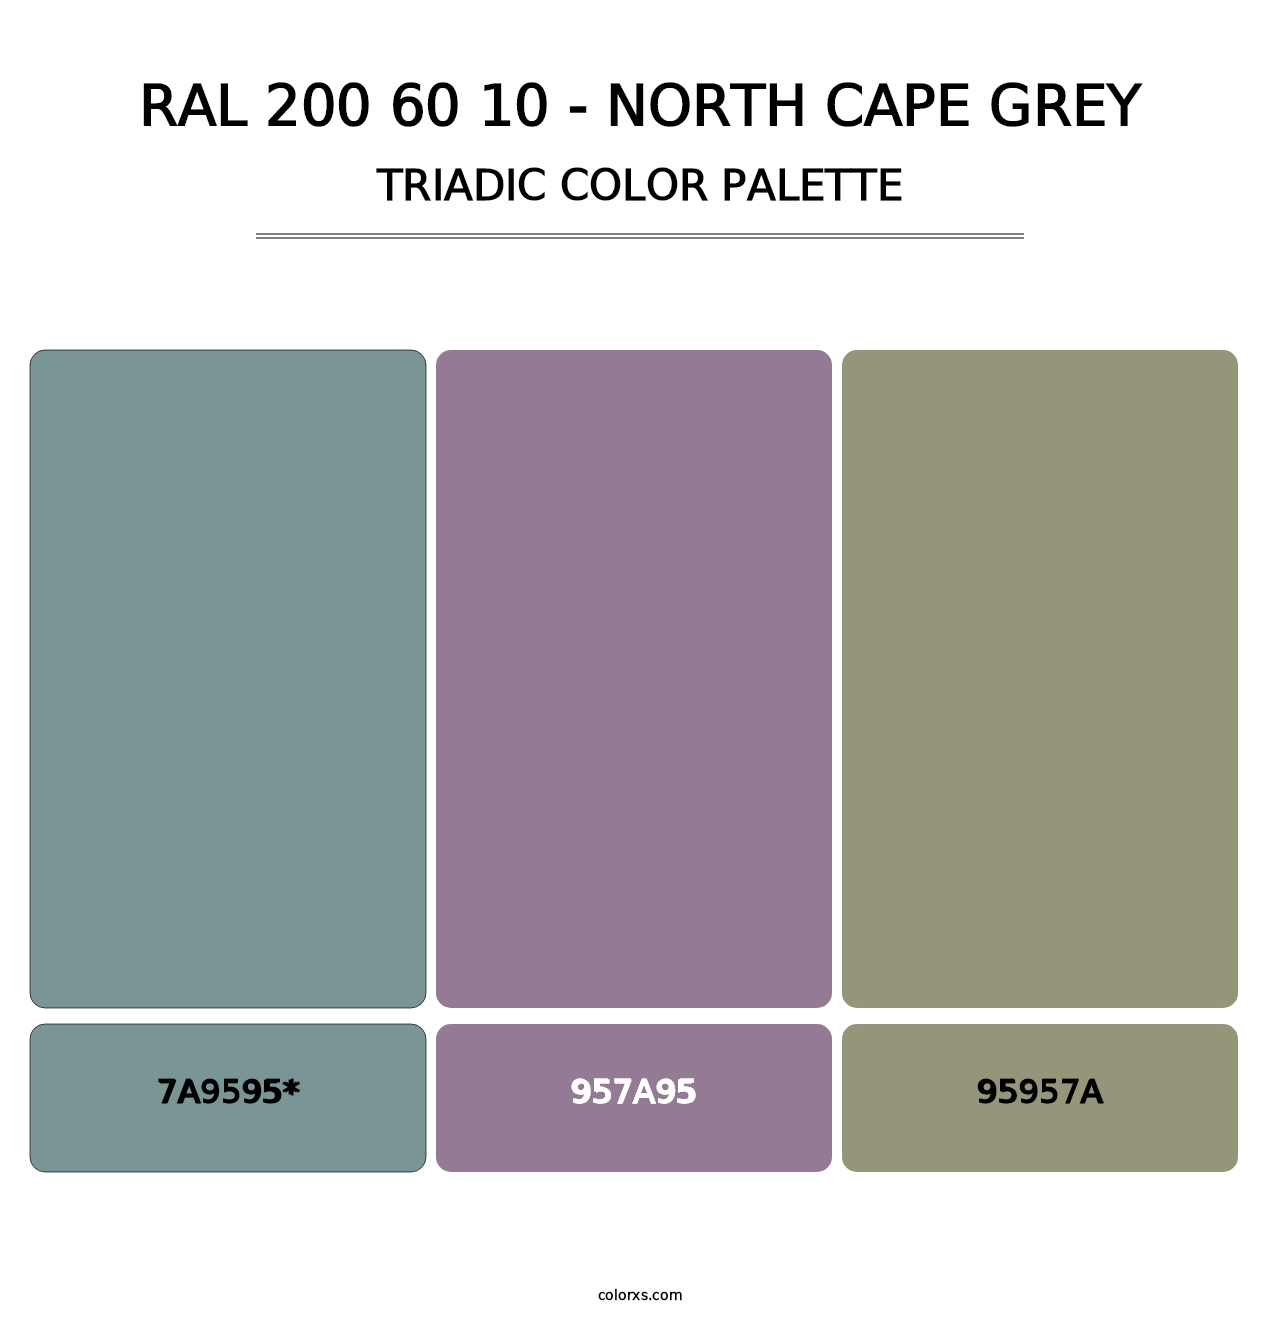 RAL 200 60 10 - North Cape Grey - Triadic Color Palette